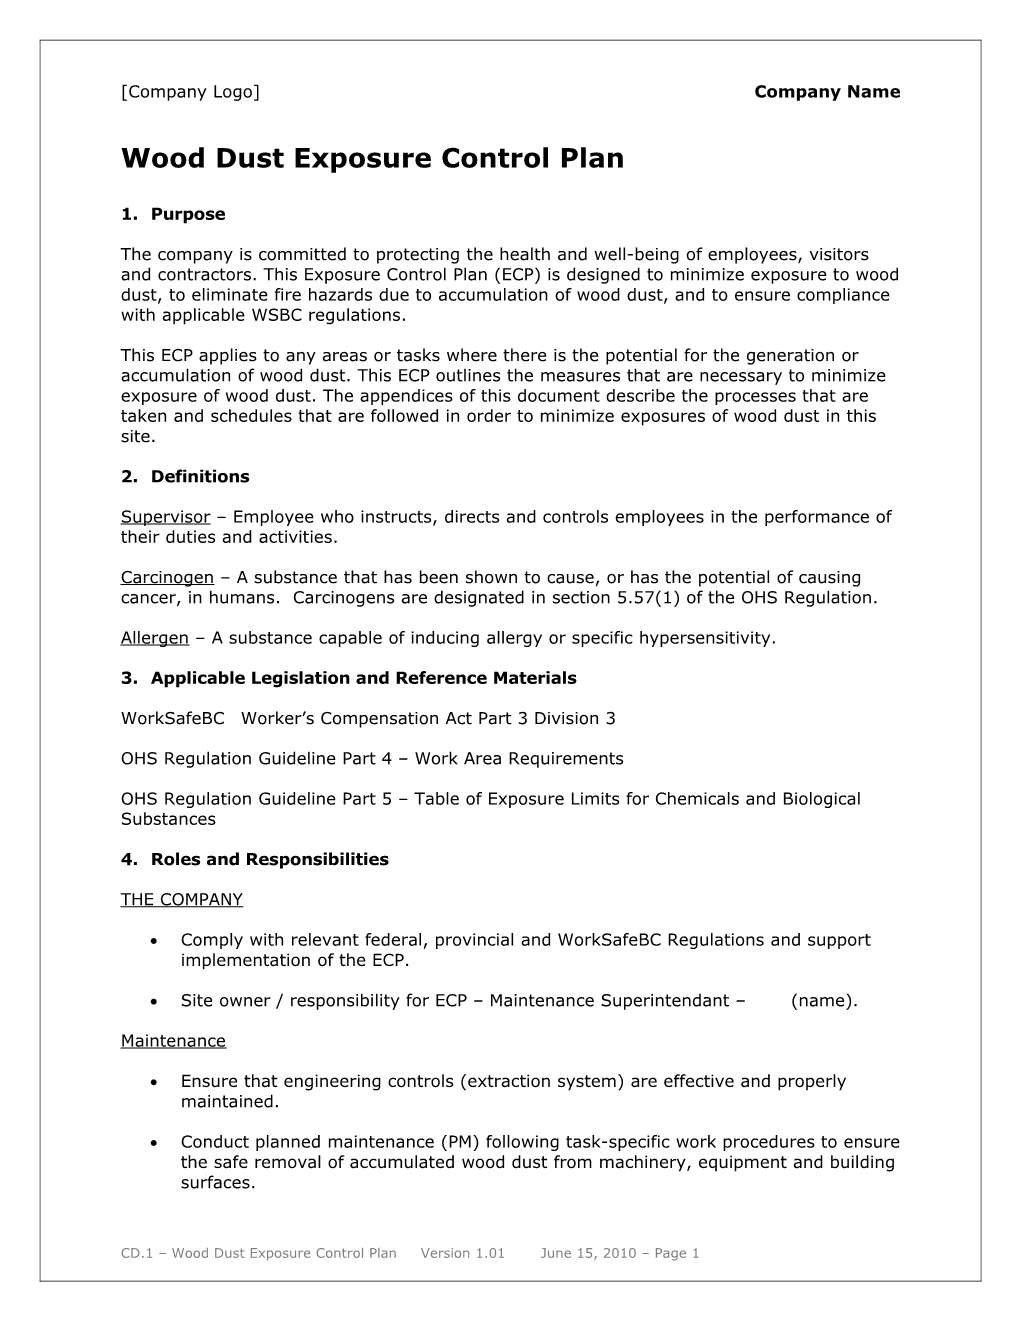 Wood Dust Exposure Control Plan